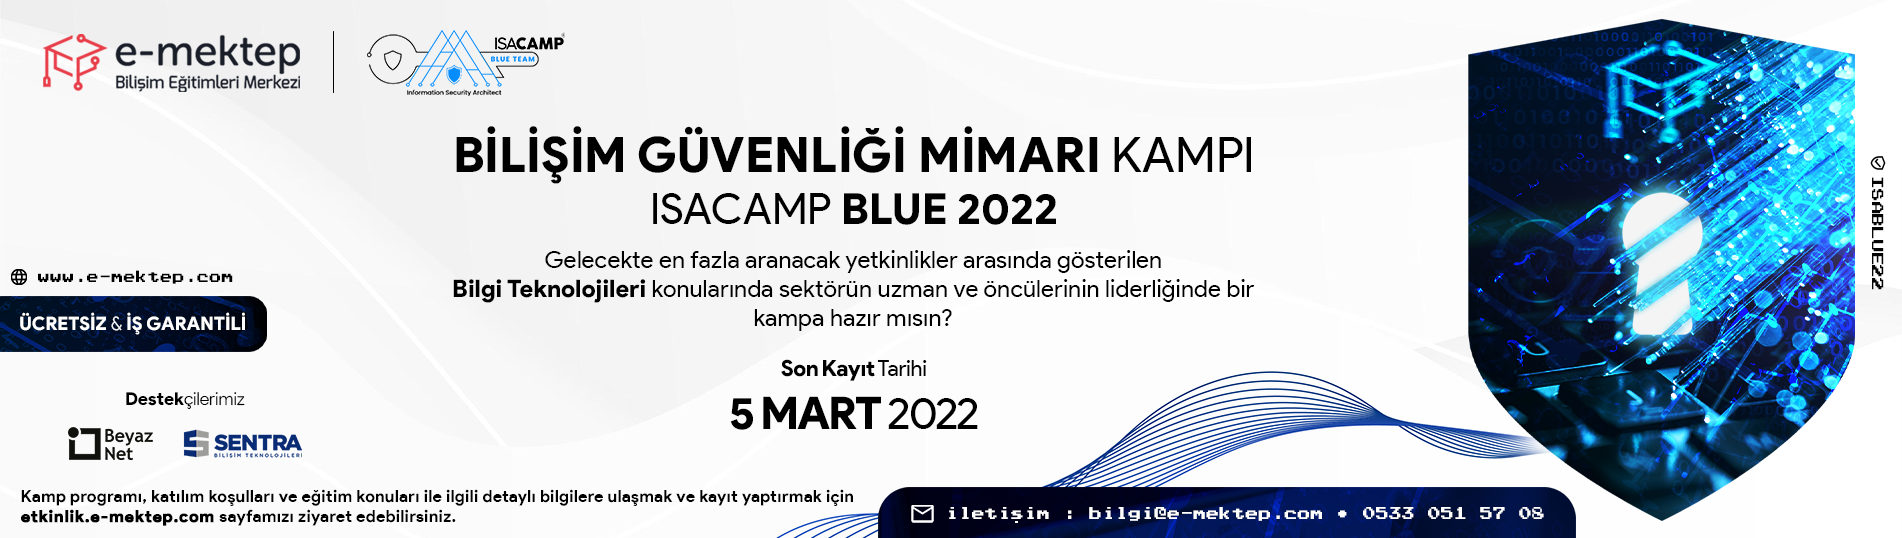 ISACAMP-BLUE 2022